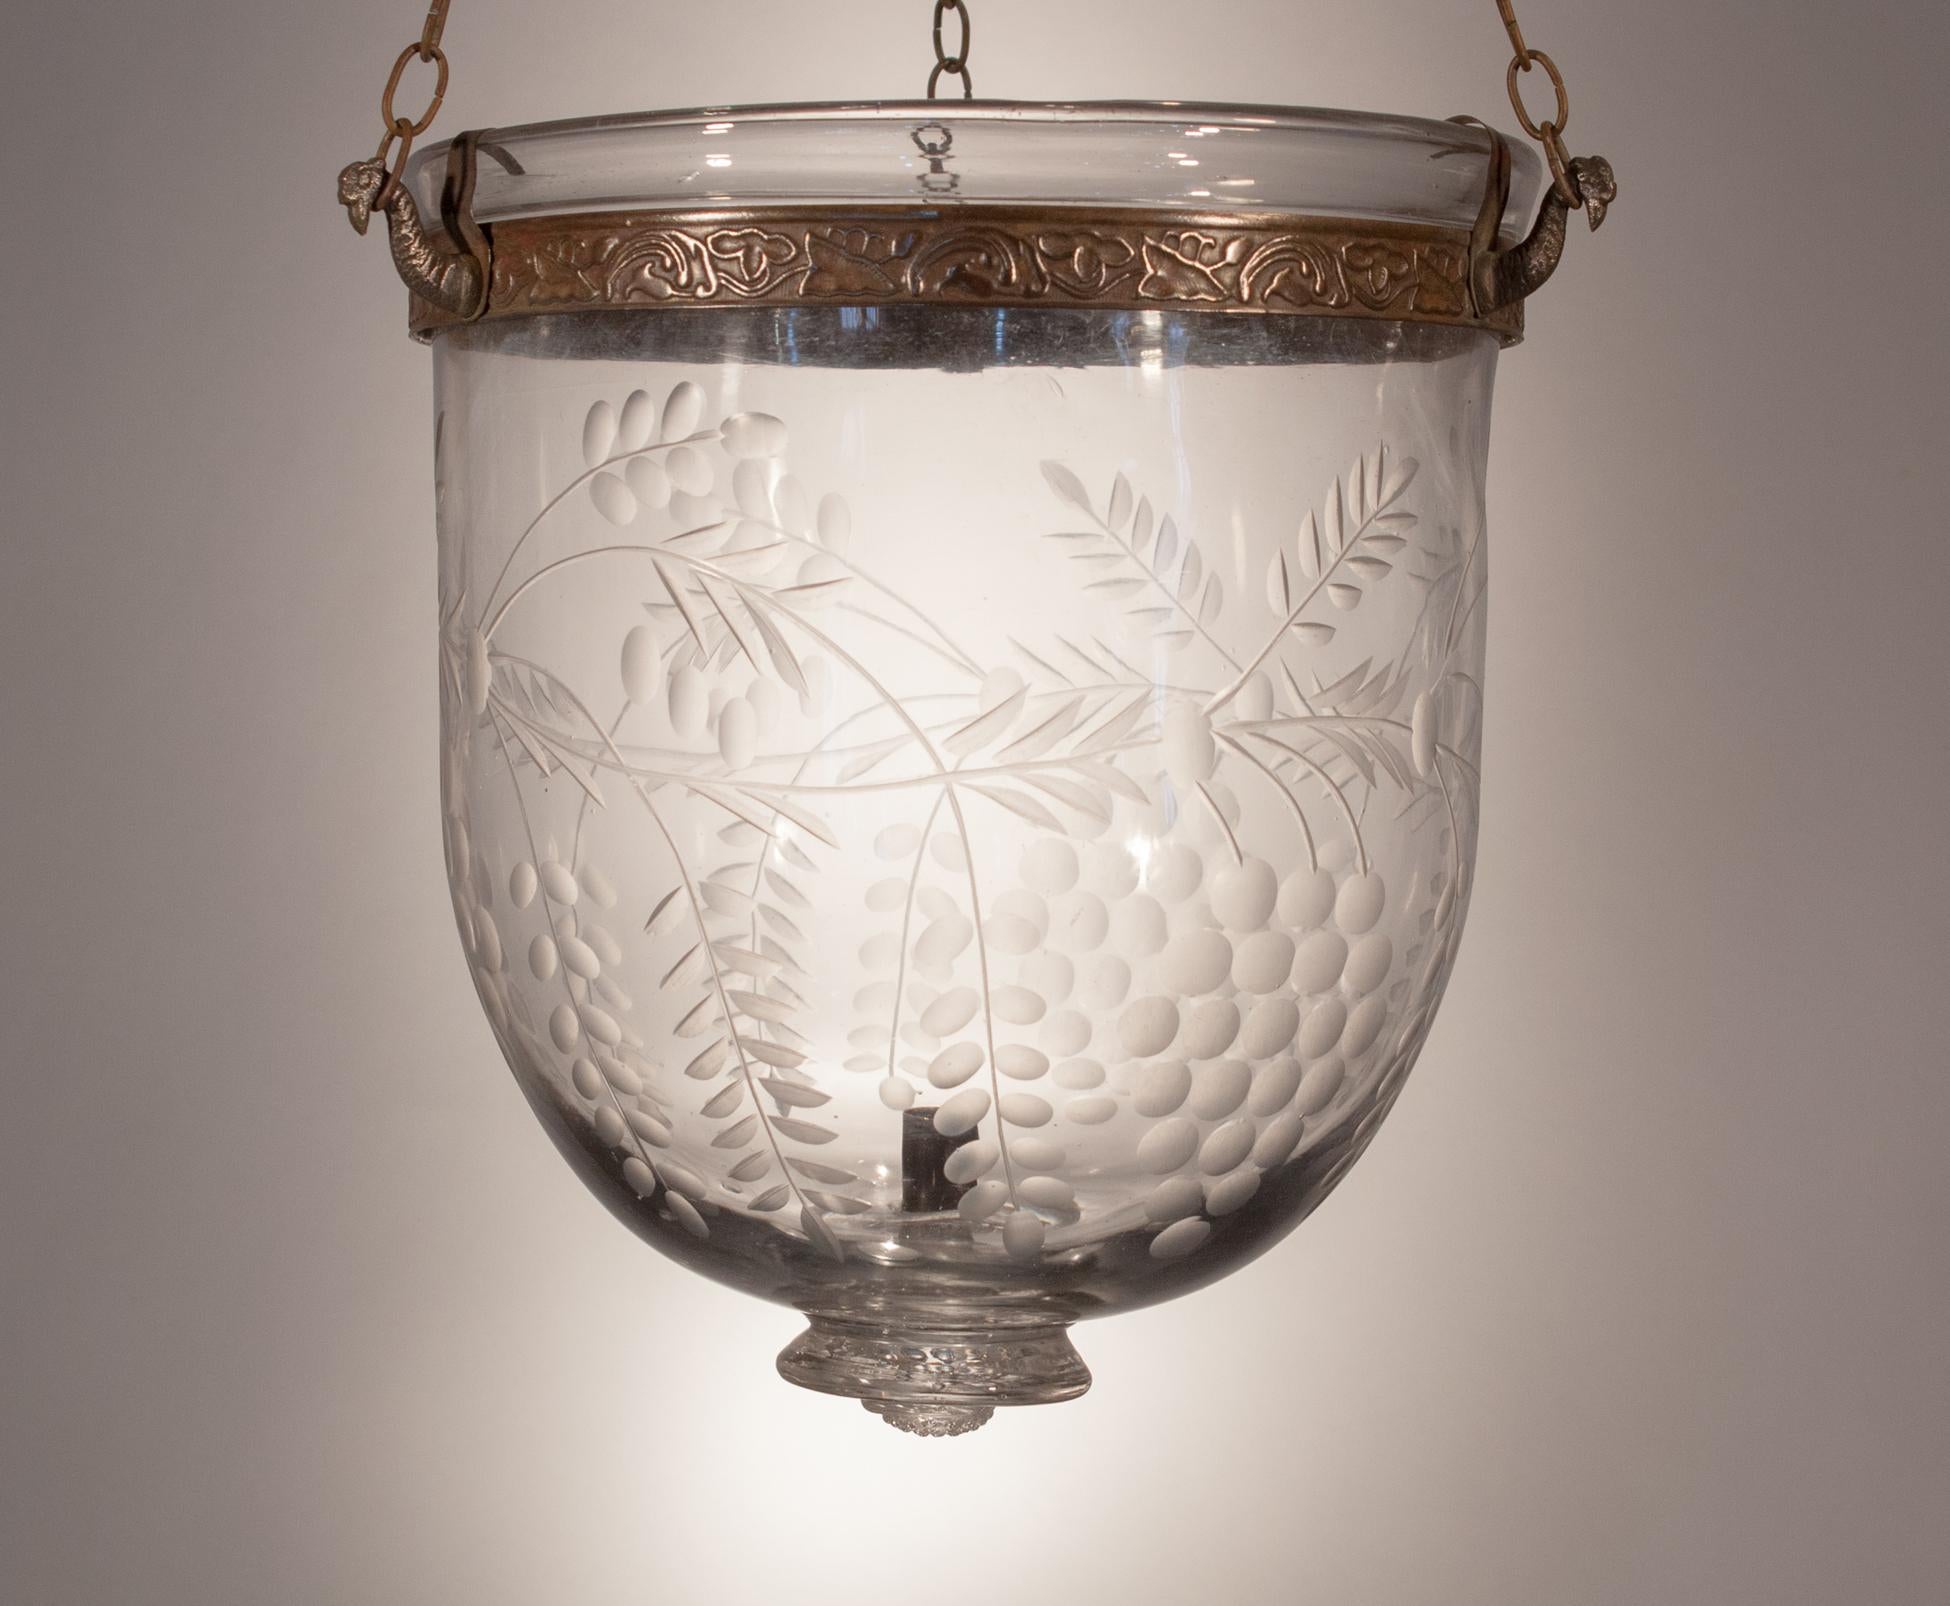  Bell Jar Lantern with Grape Vine Etching 3